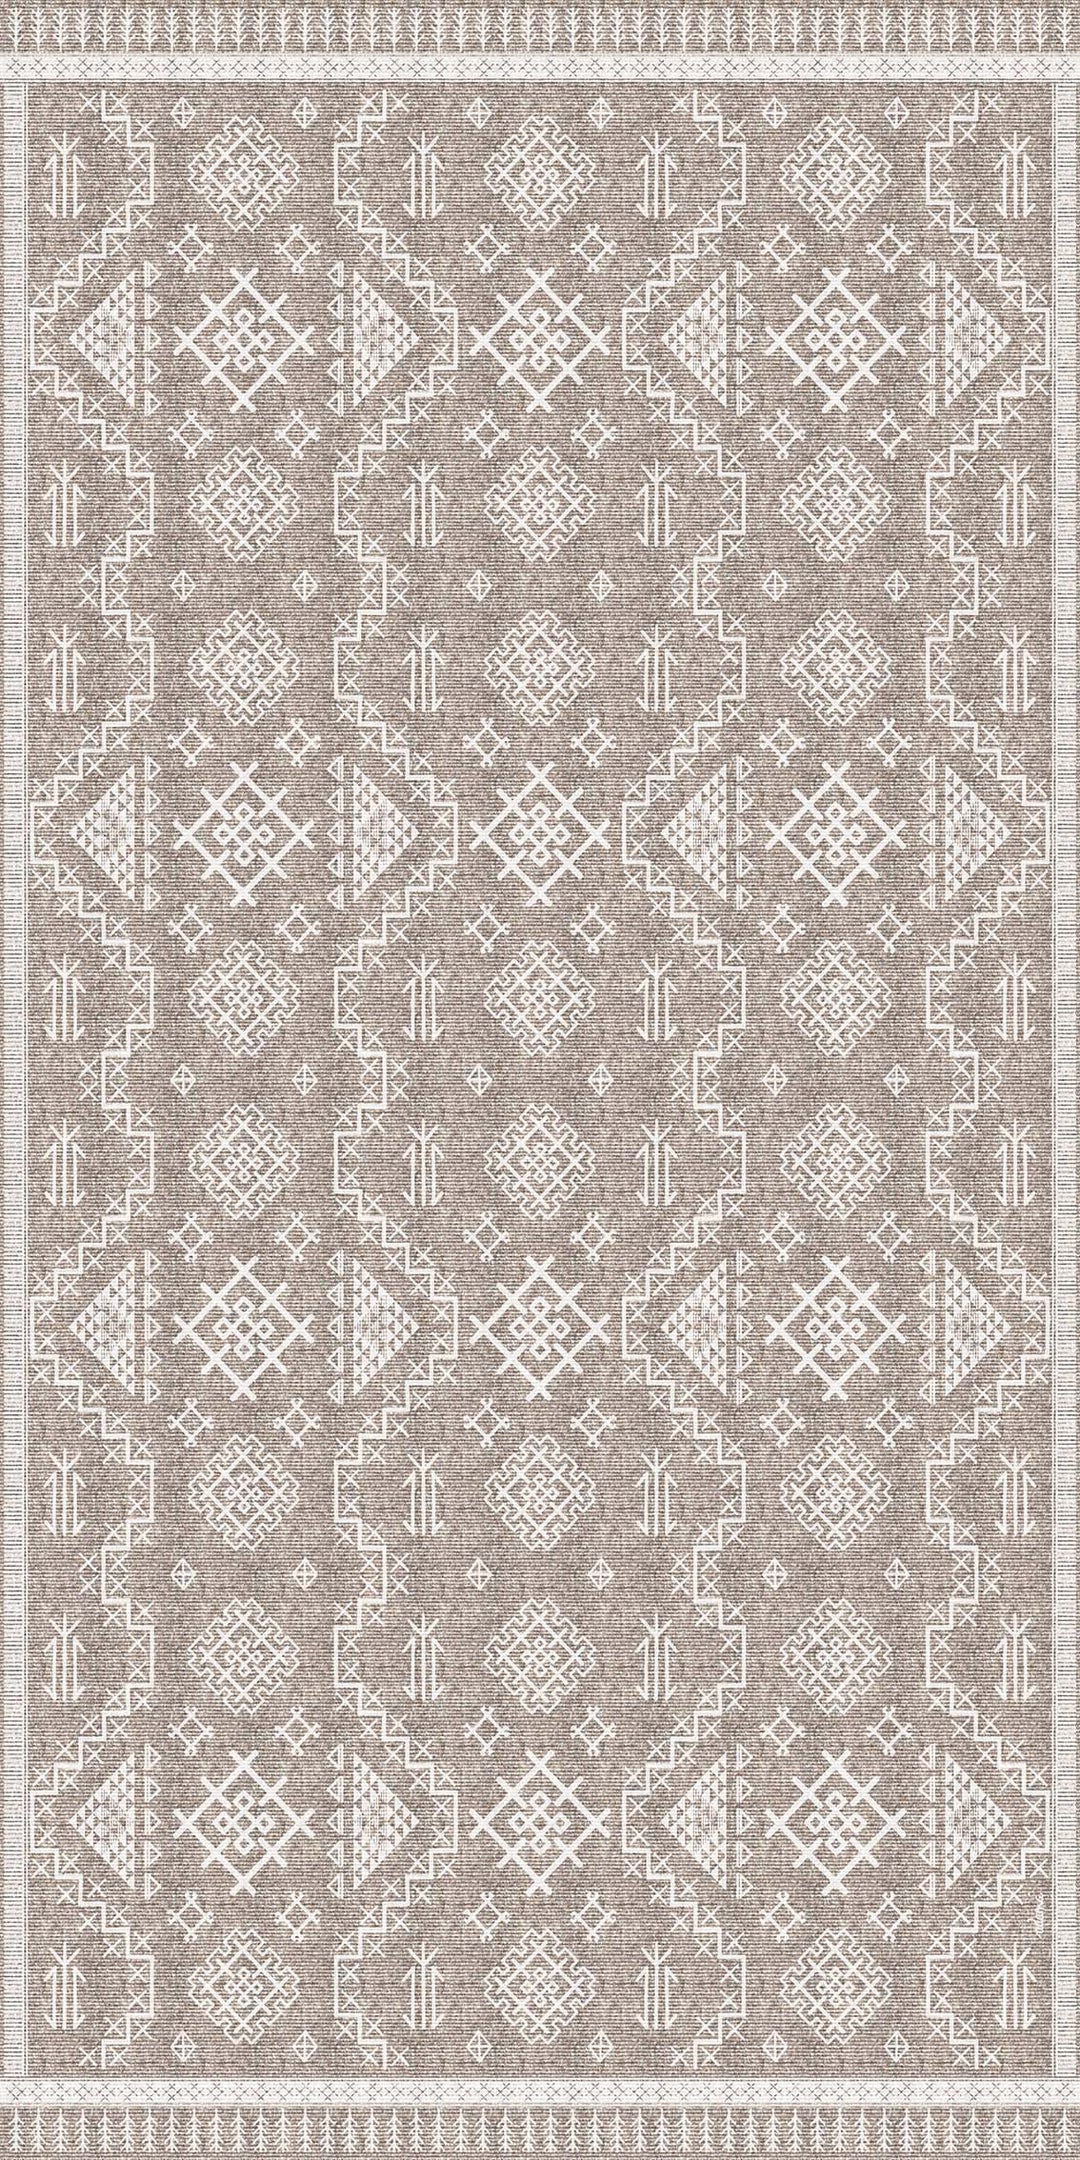 Tapis/carpette en vinyle Adama (Aztec_W) 120x180